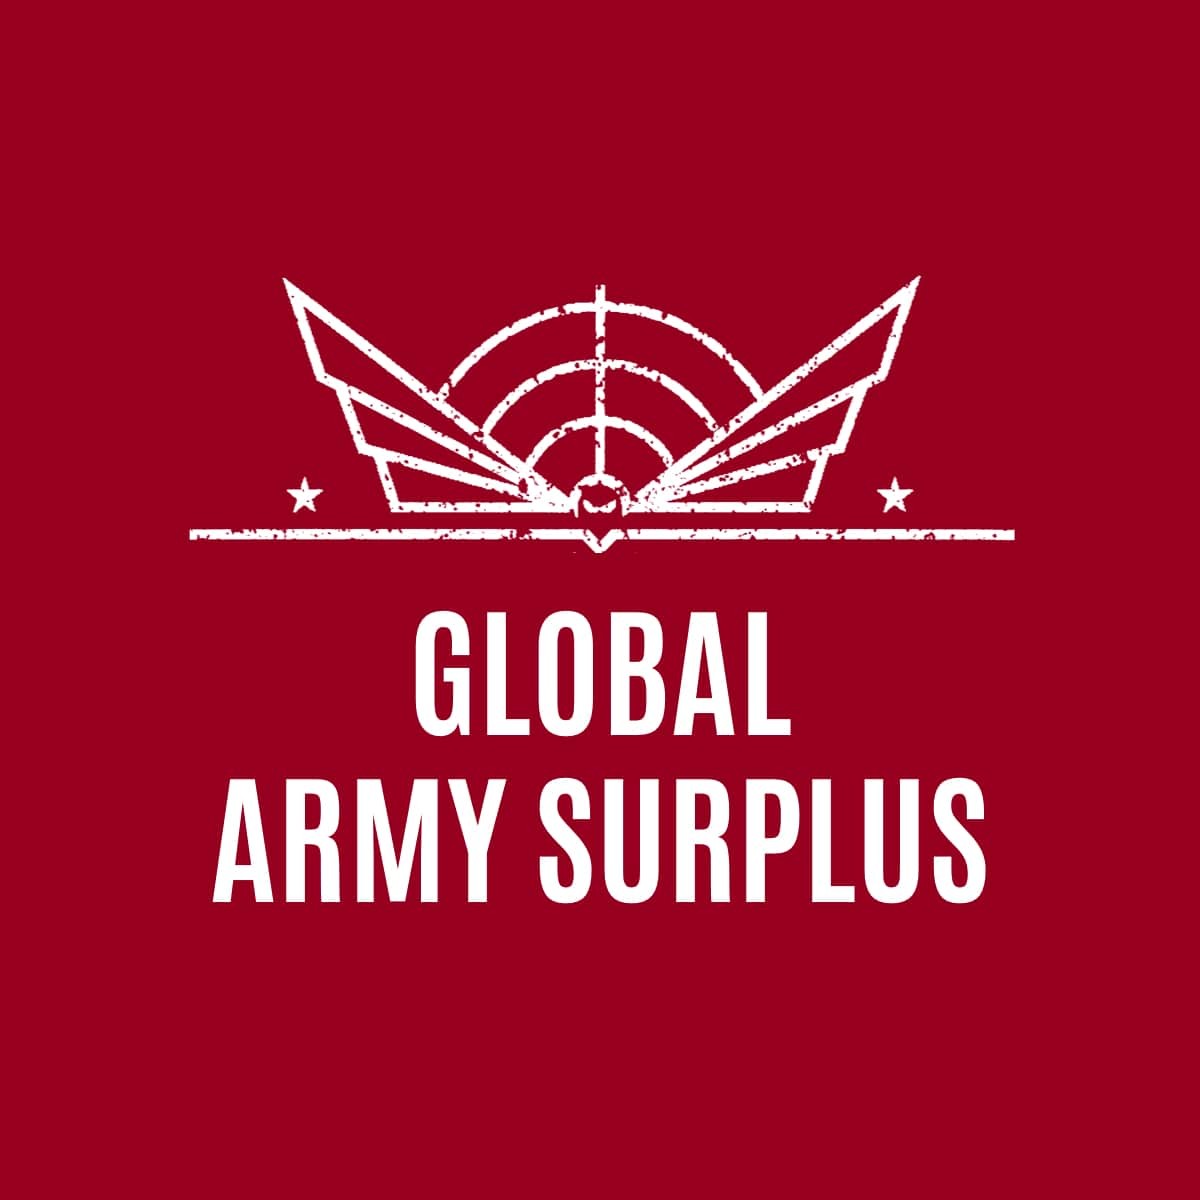 GLOBAL ARMY SURPLUS